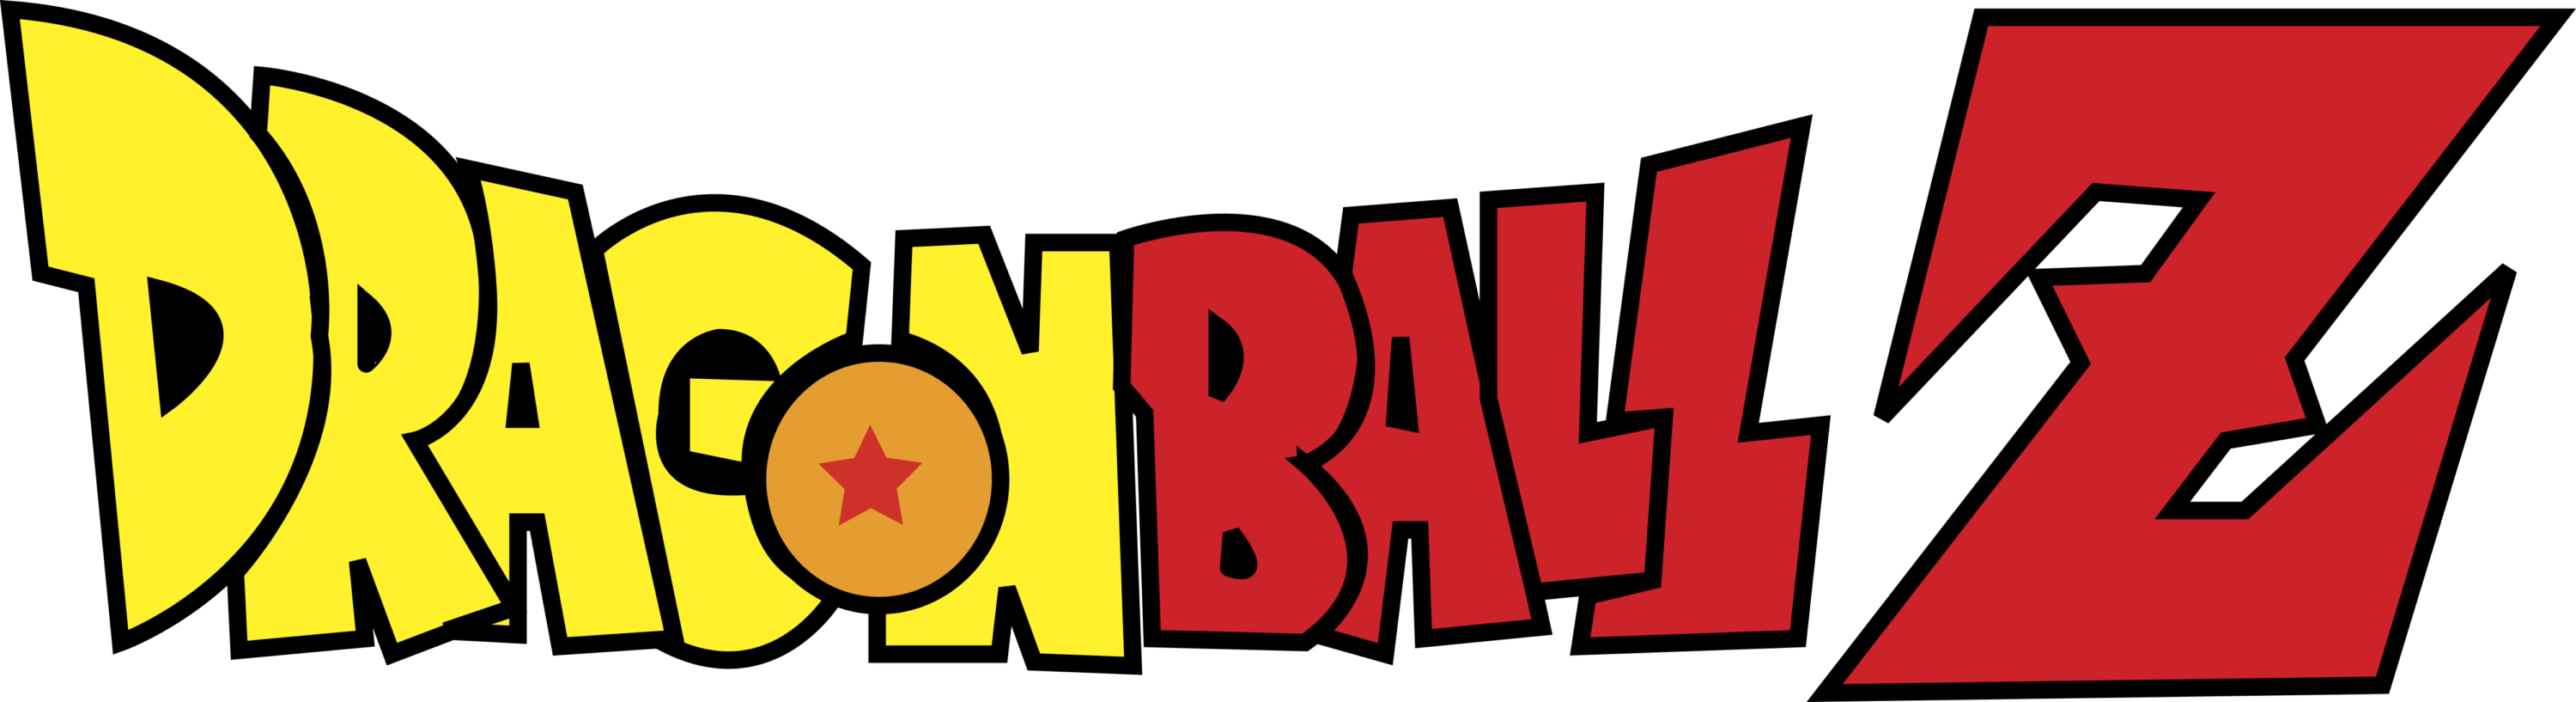 Dragon Ball Z Logo text